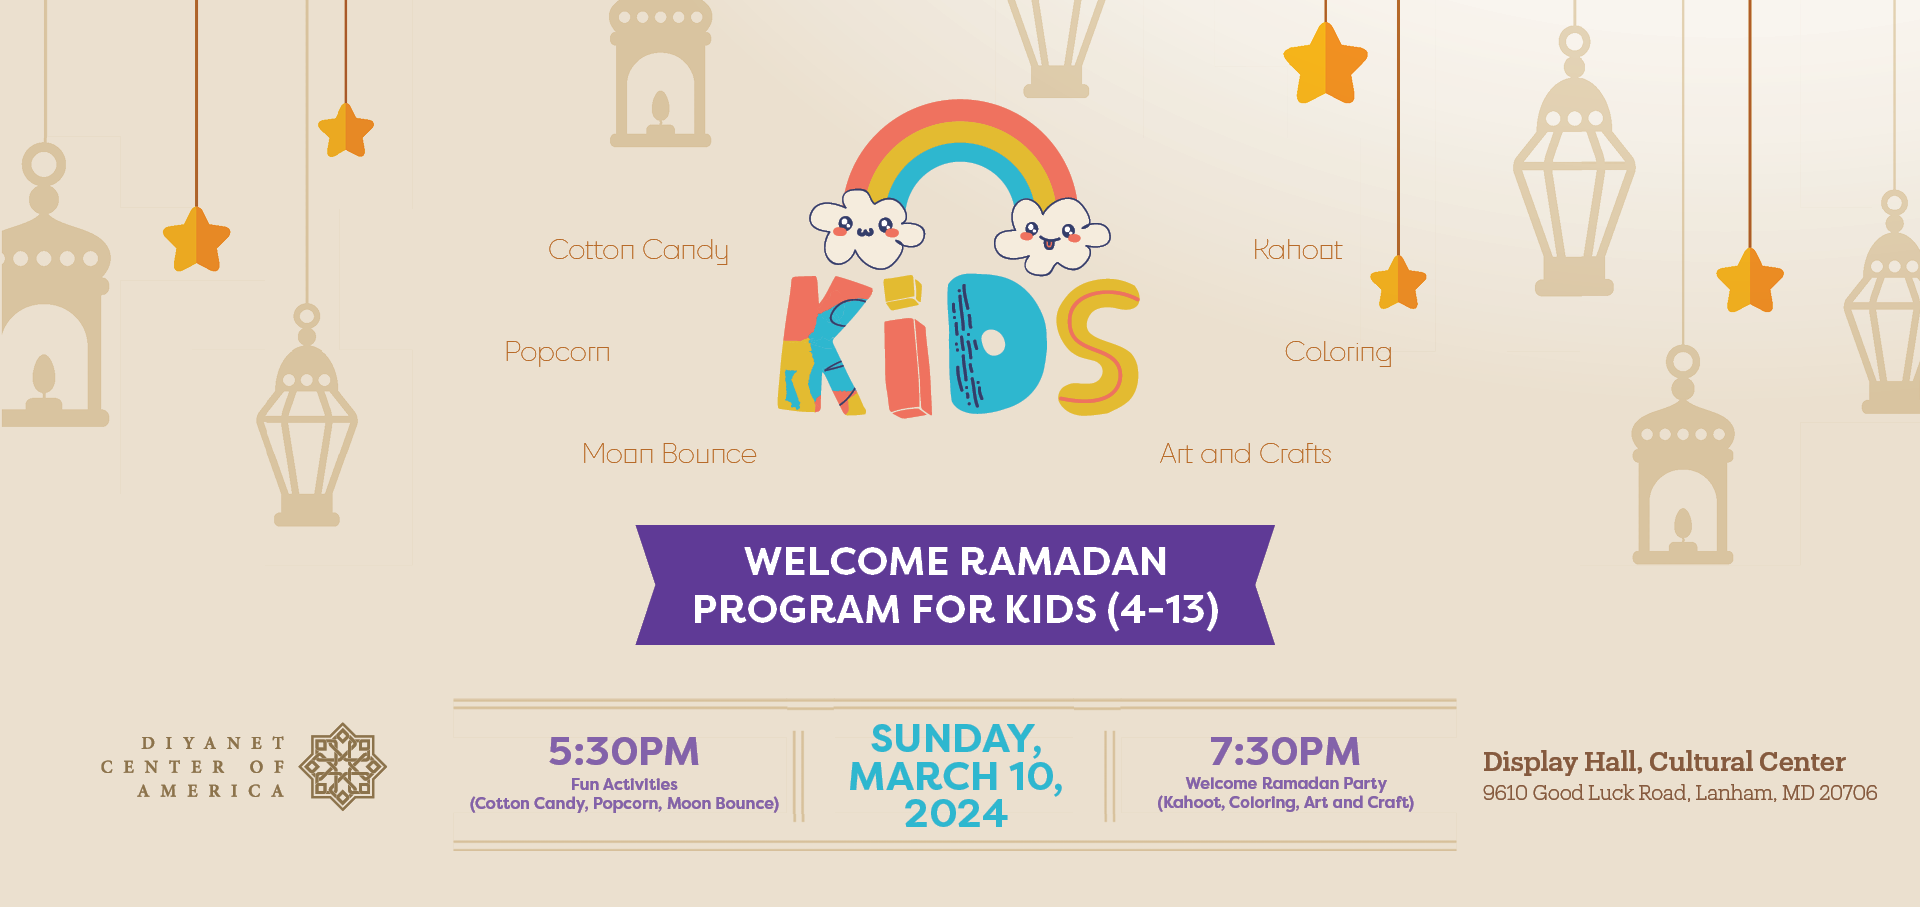 Welcome Ramadan Program for Kids - Ramadan 2024